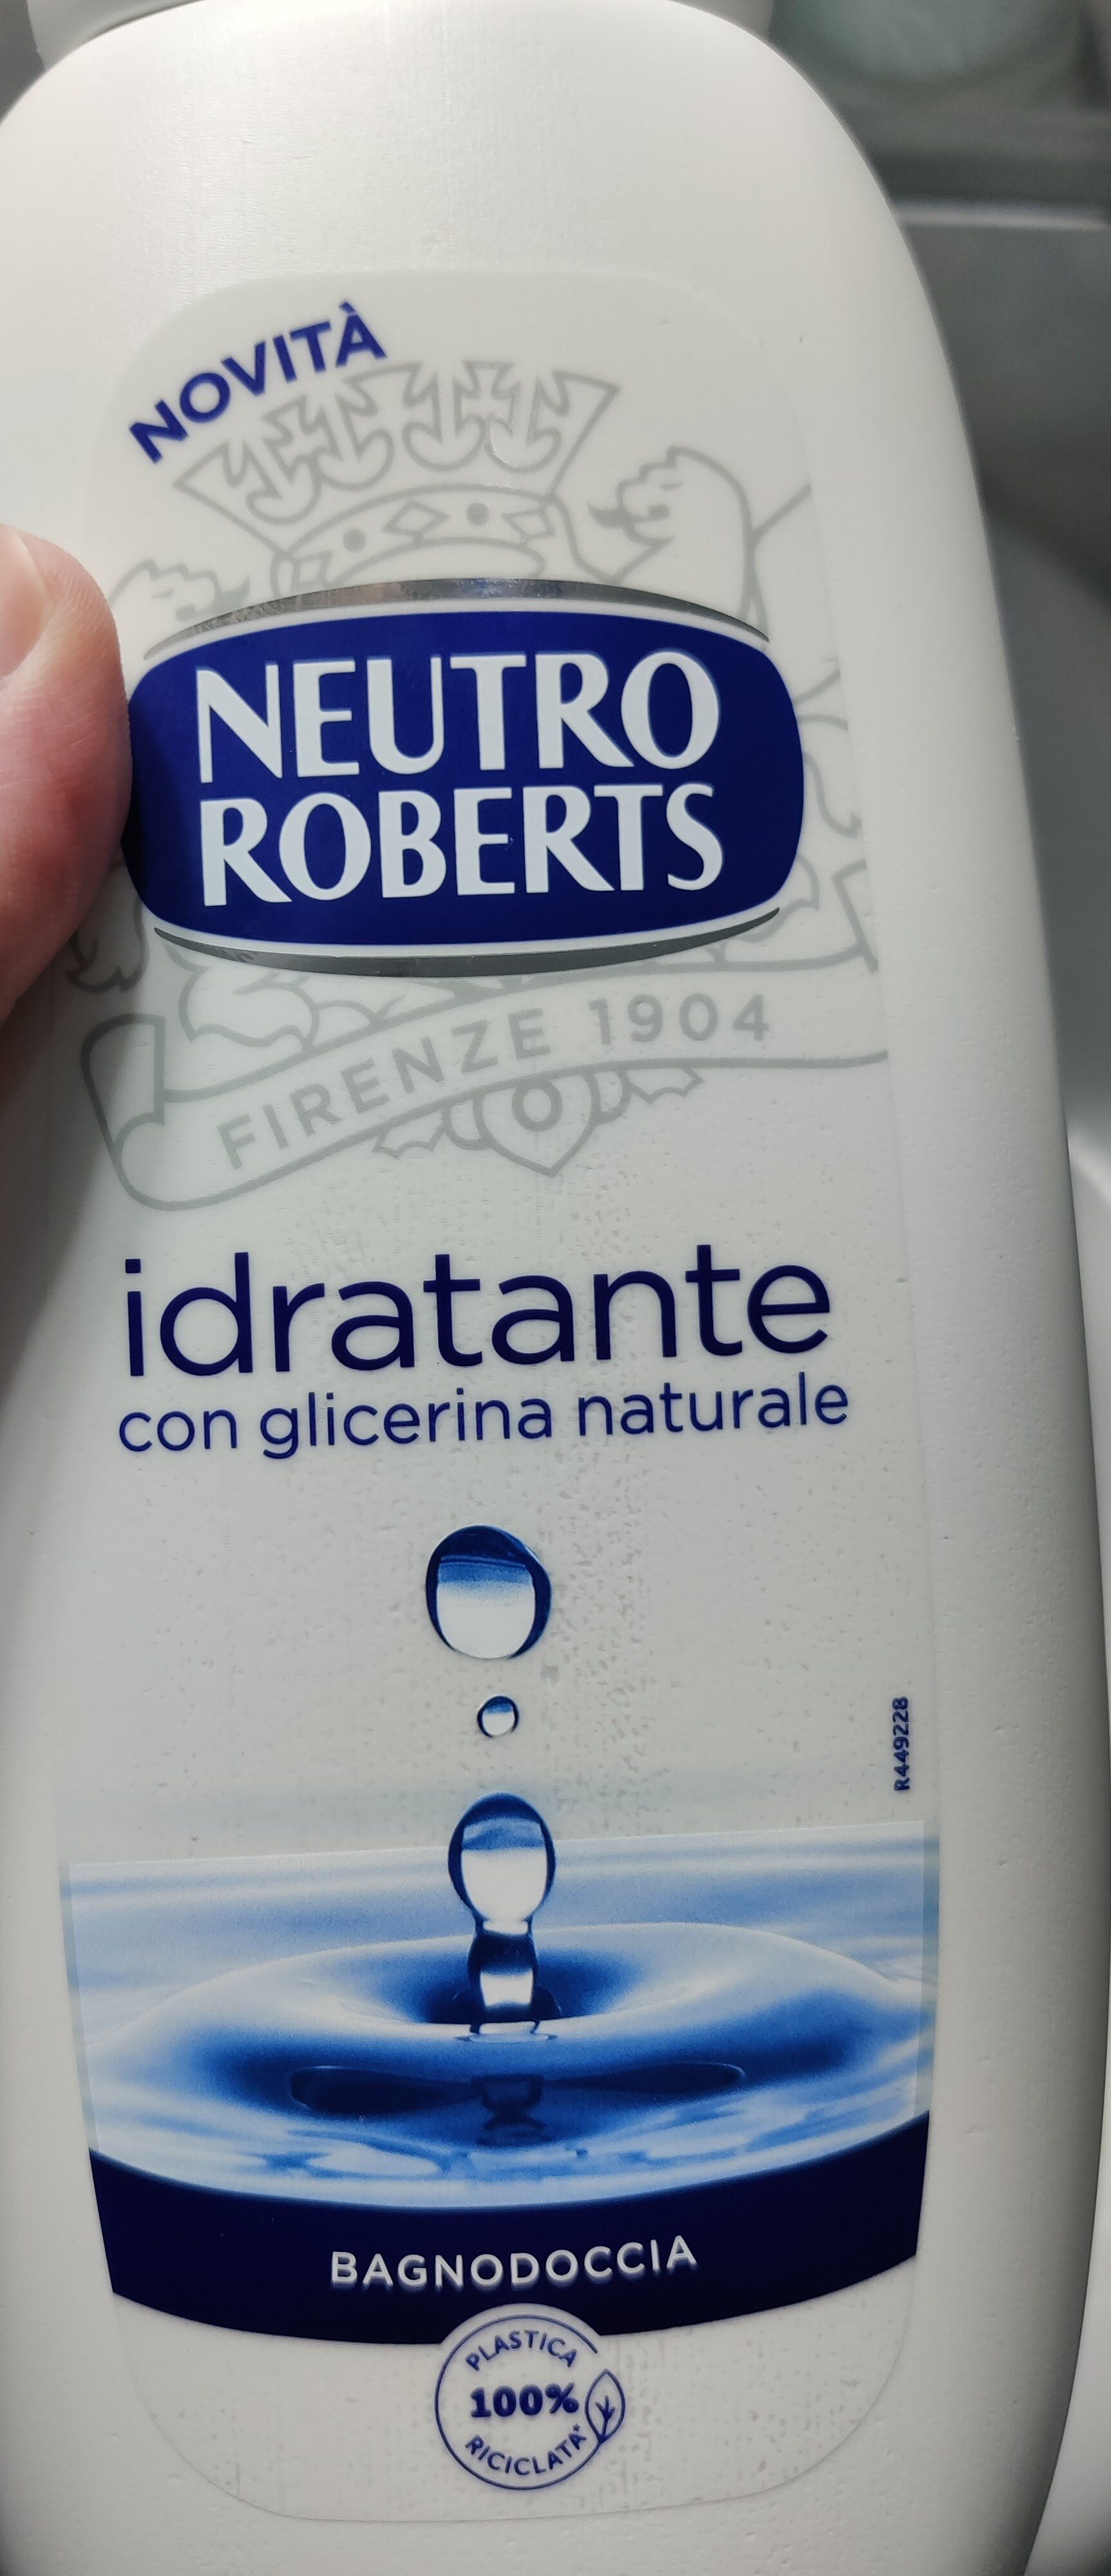 Bagnodoccia idratante Neutro Roberts - Produkto - it